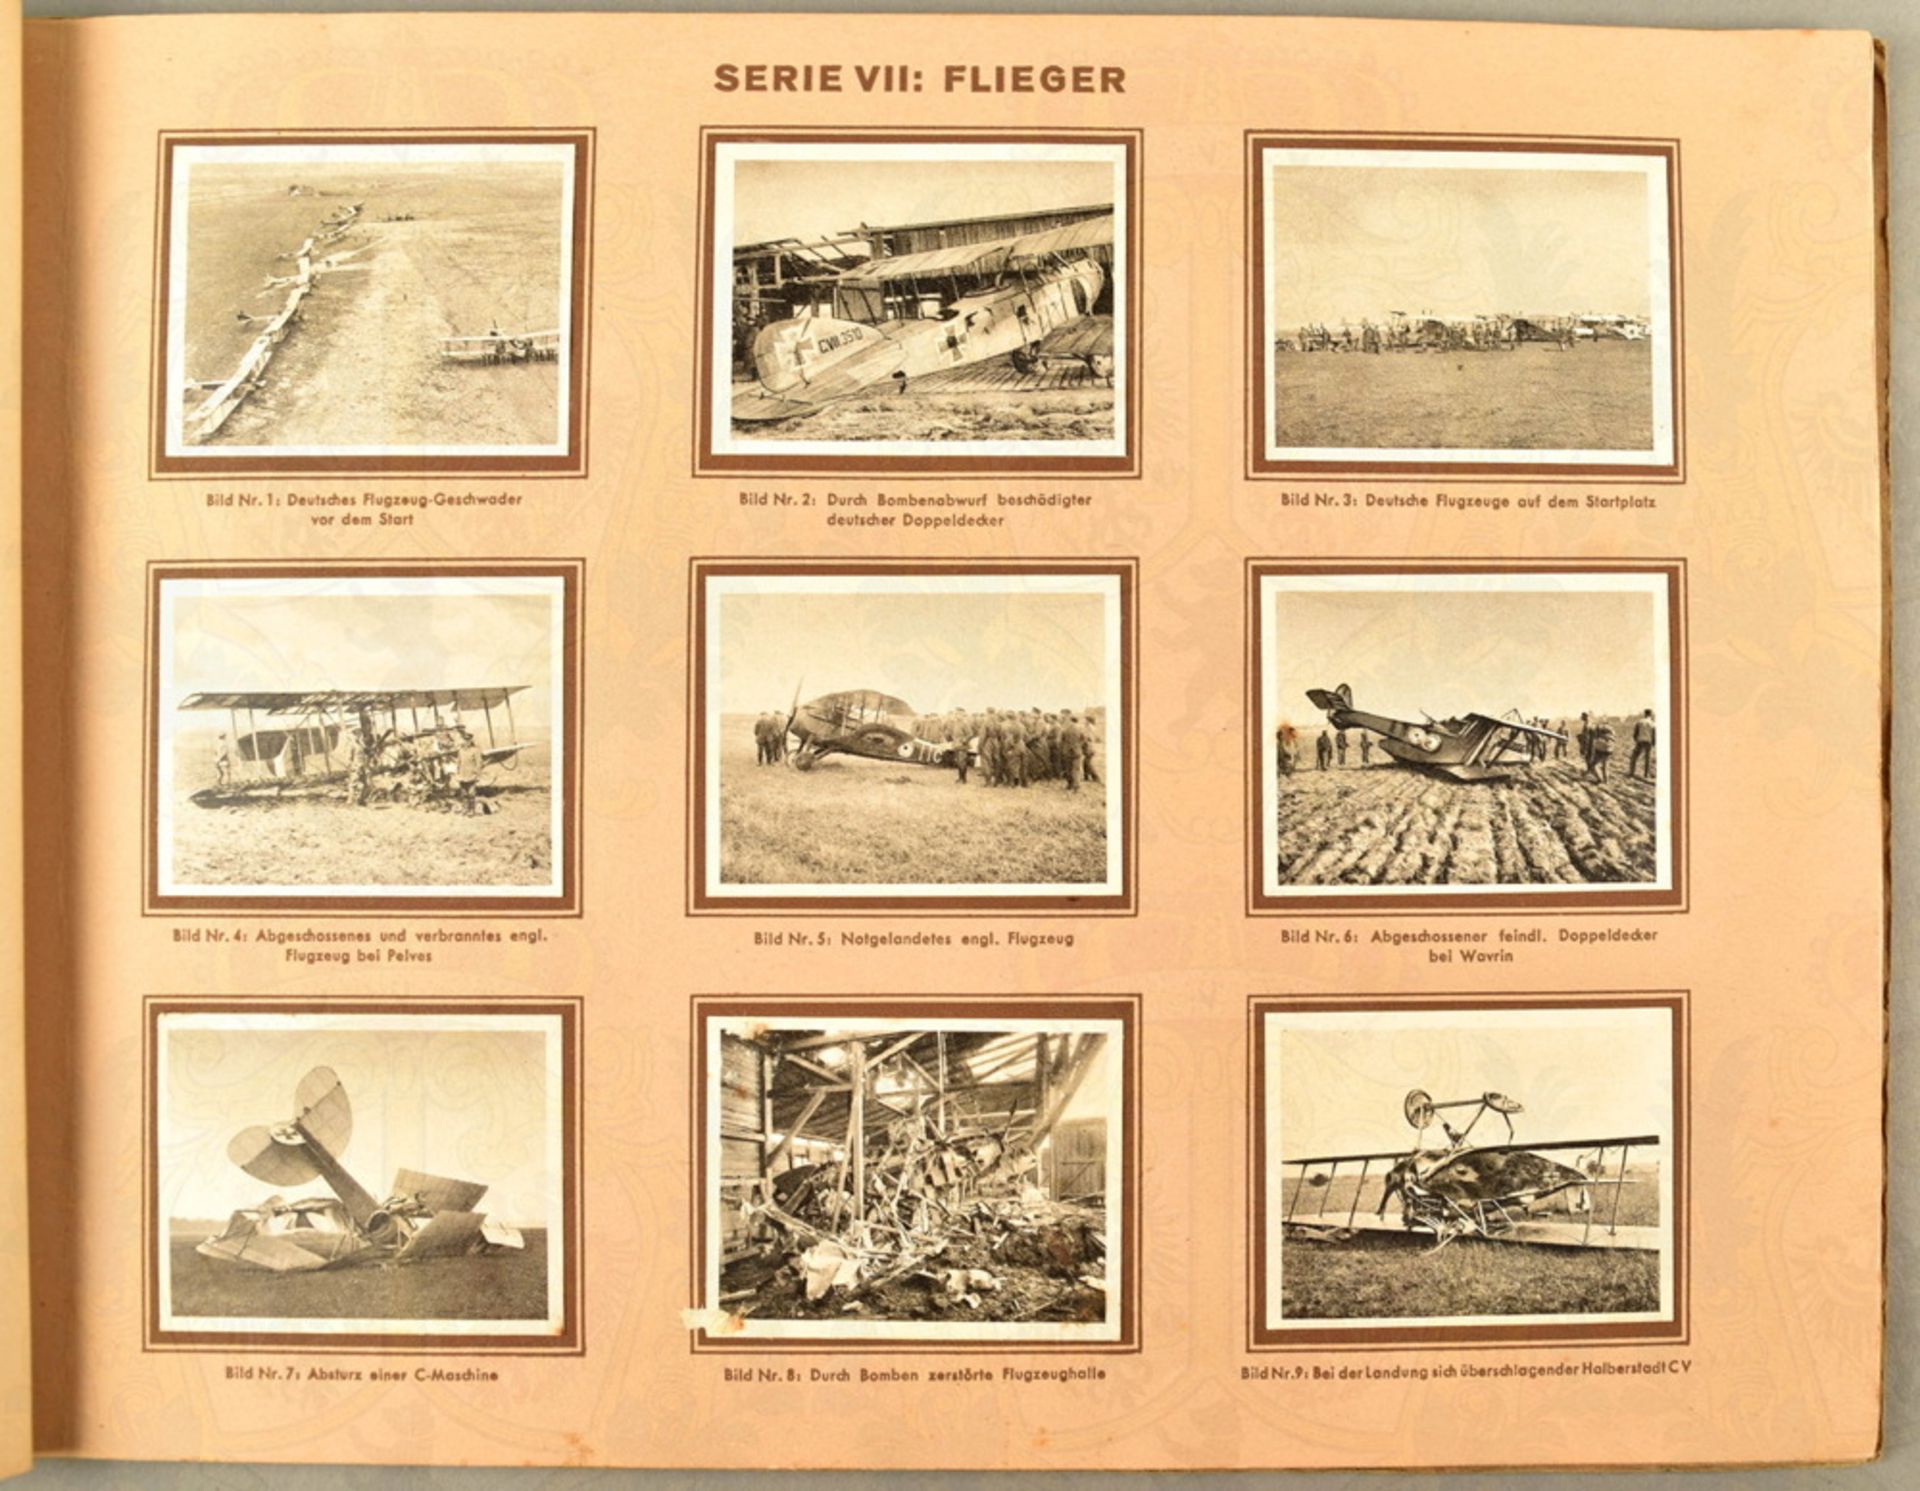 REUNION WELTKRIEGSBILDER 1914-1918 Obercunnersdorf 1933, kpl. m. 200 Bildern, goldgepr. Einband m. - Image 2 of 2